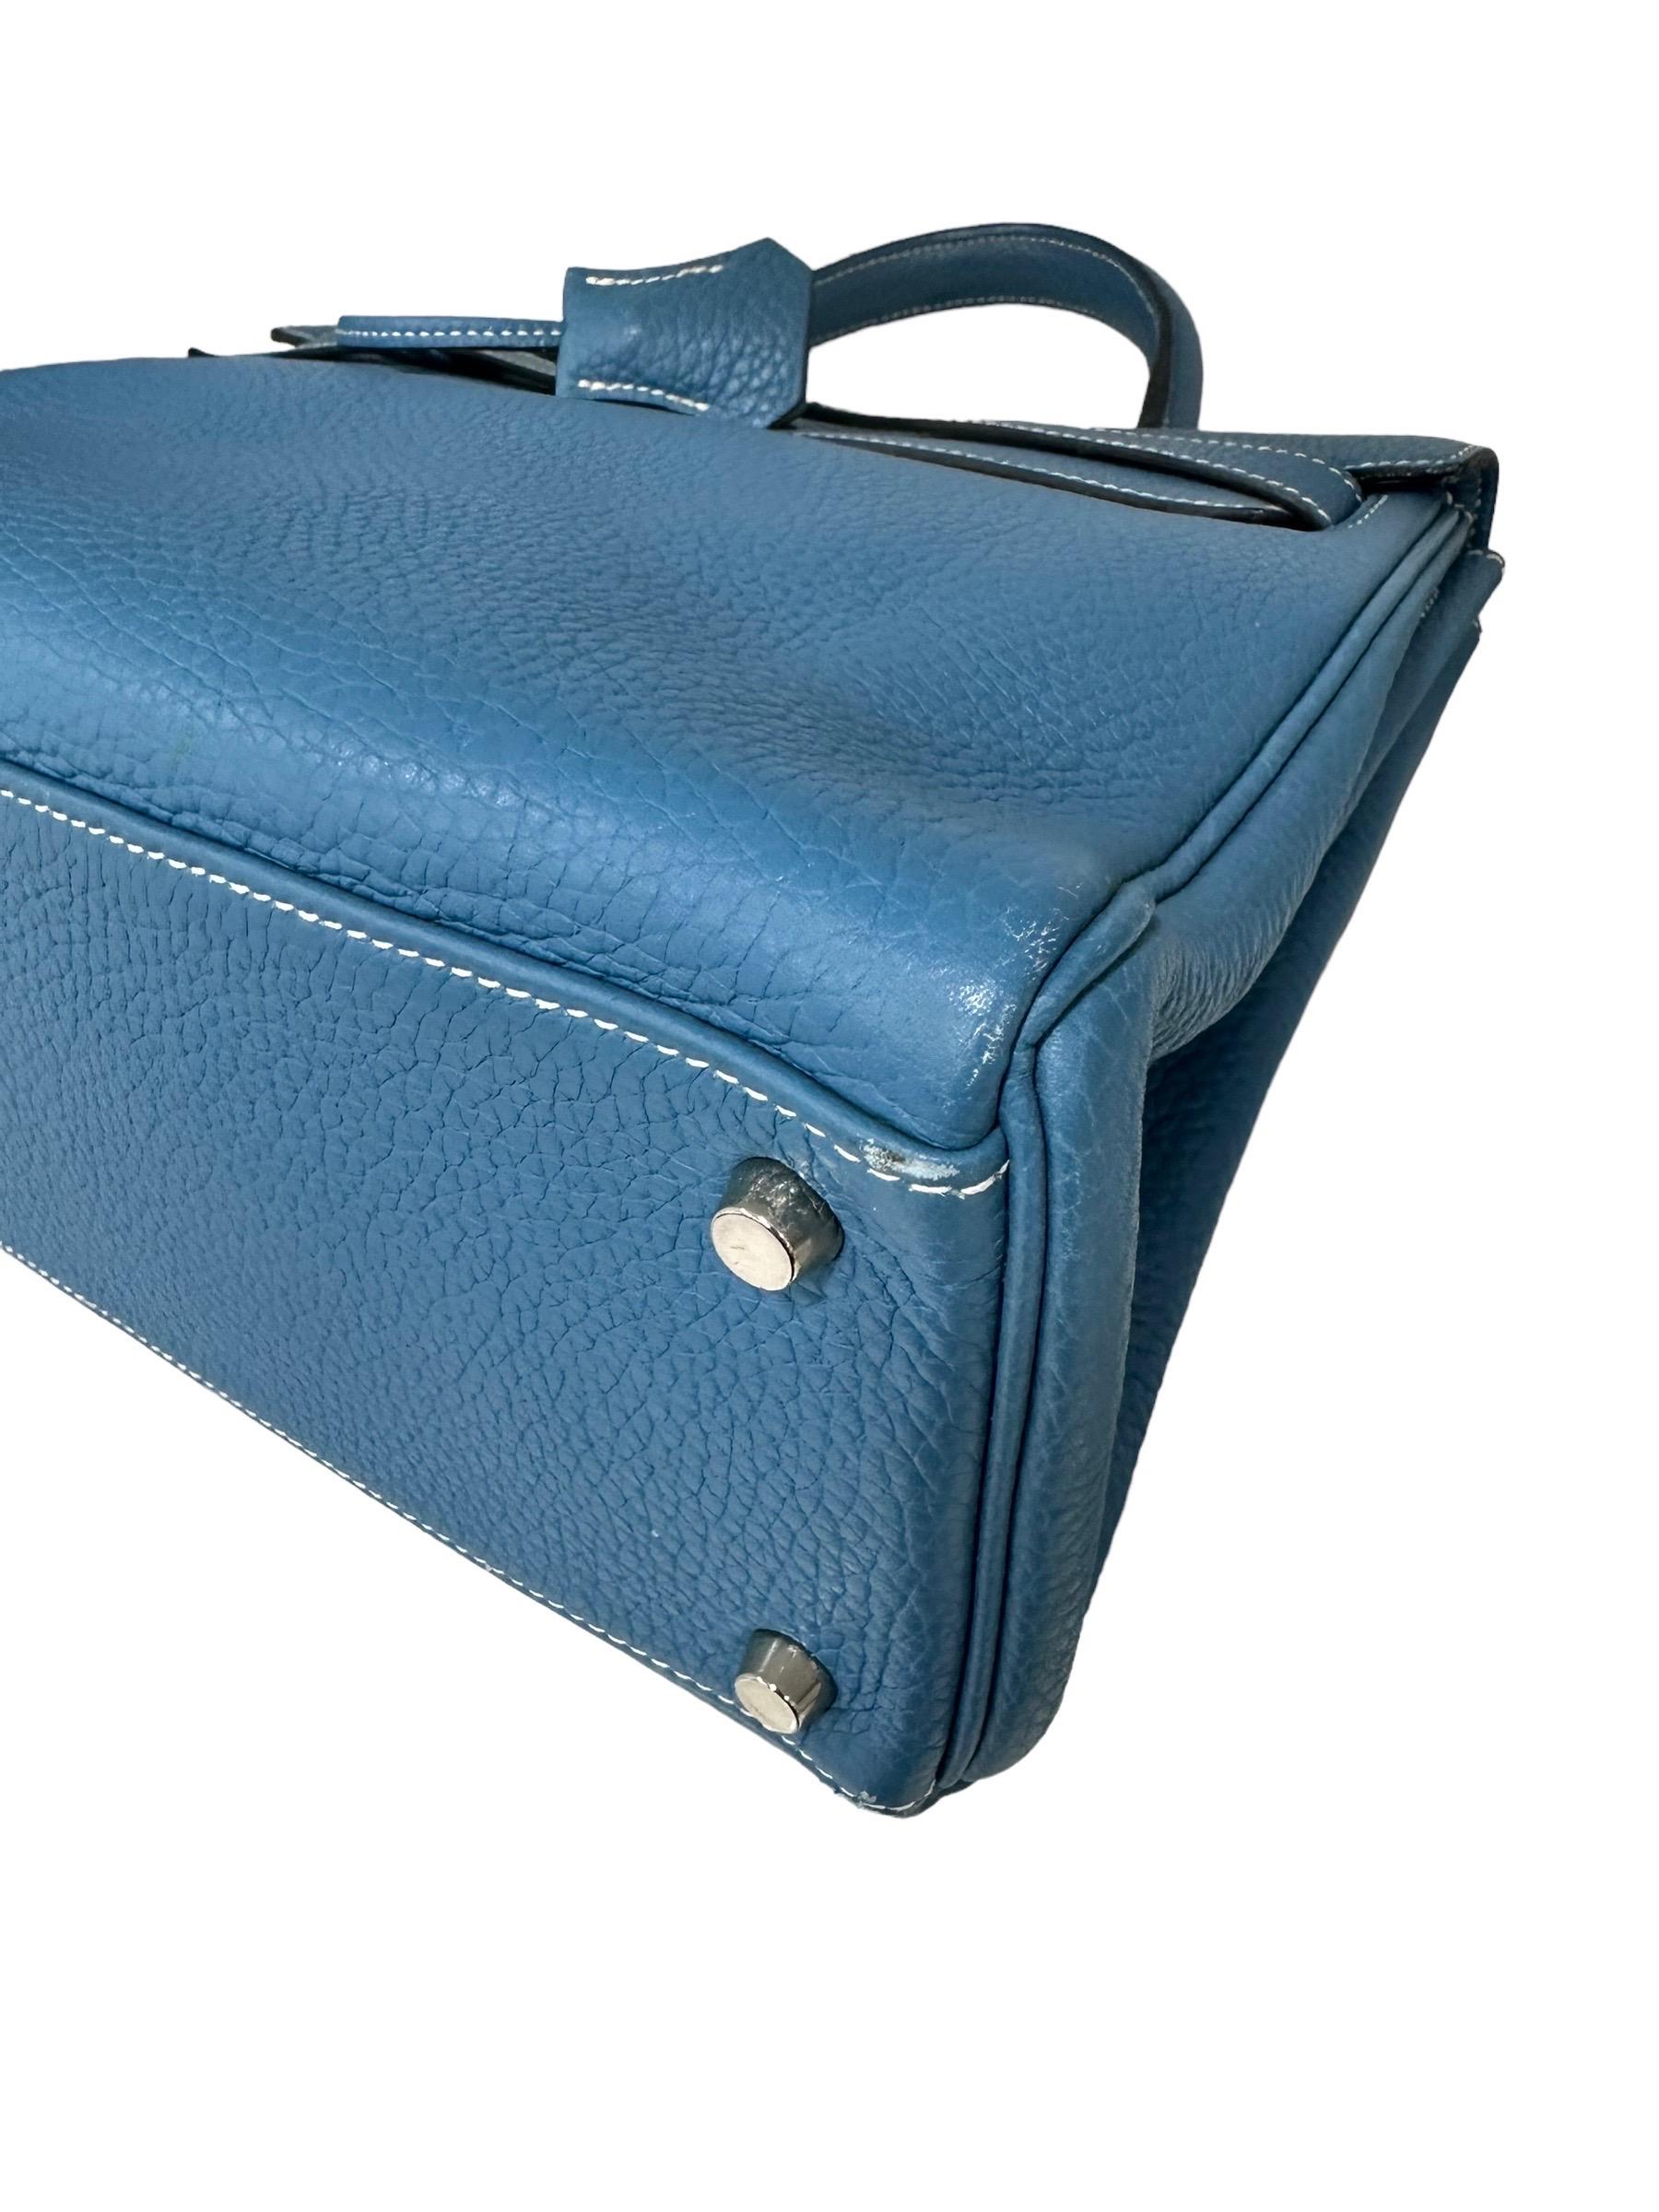 Hermès Kelly Bag 32 Clemence Leather Blue Izmir Top Handle Bag For Sale 7